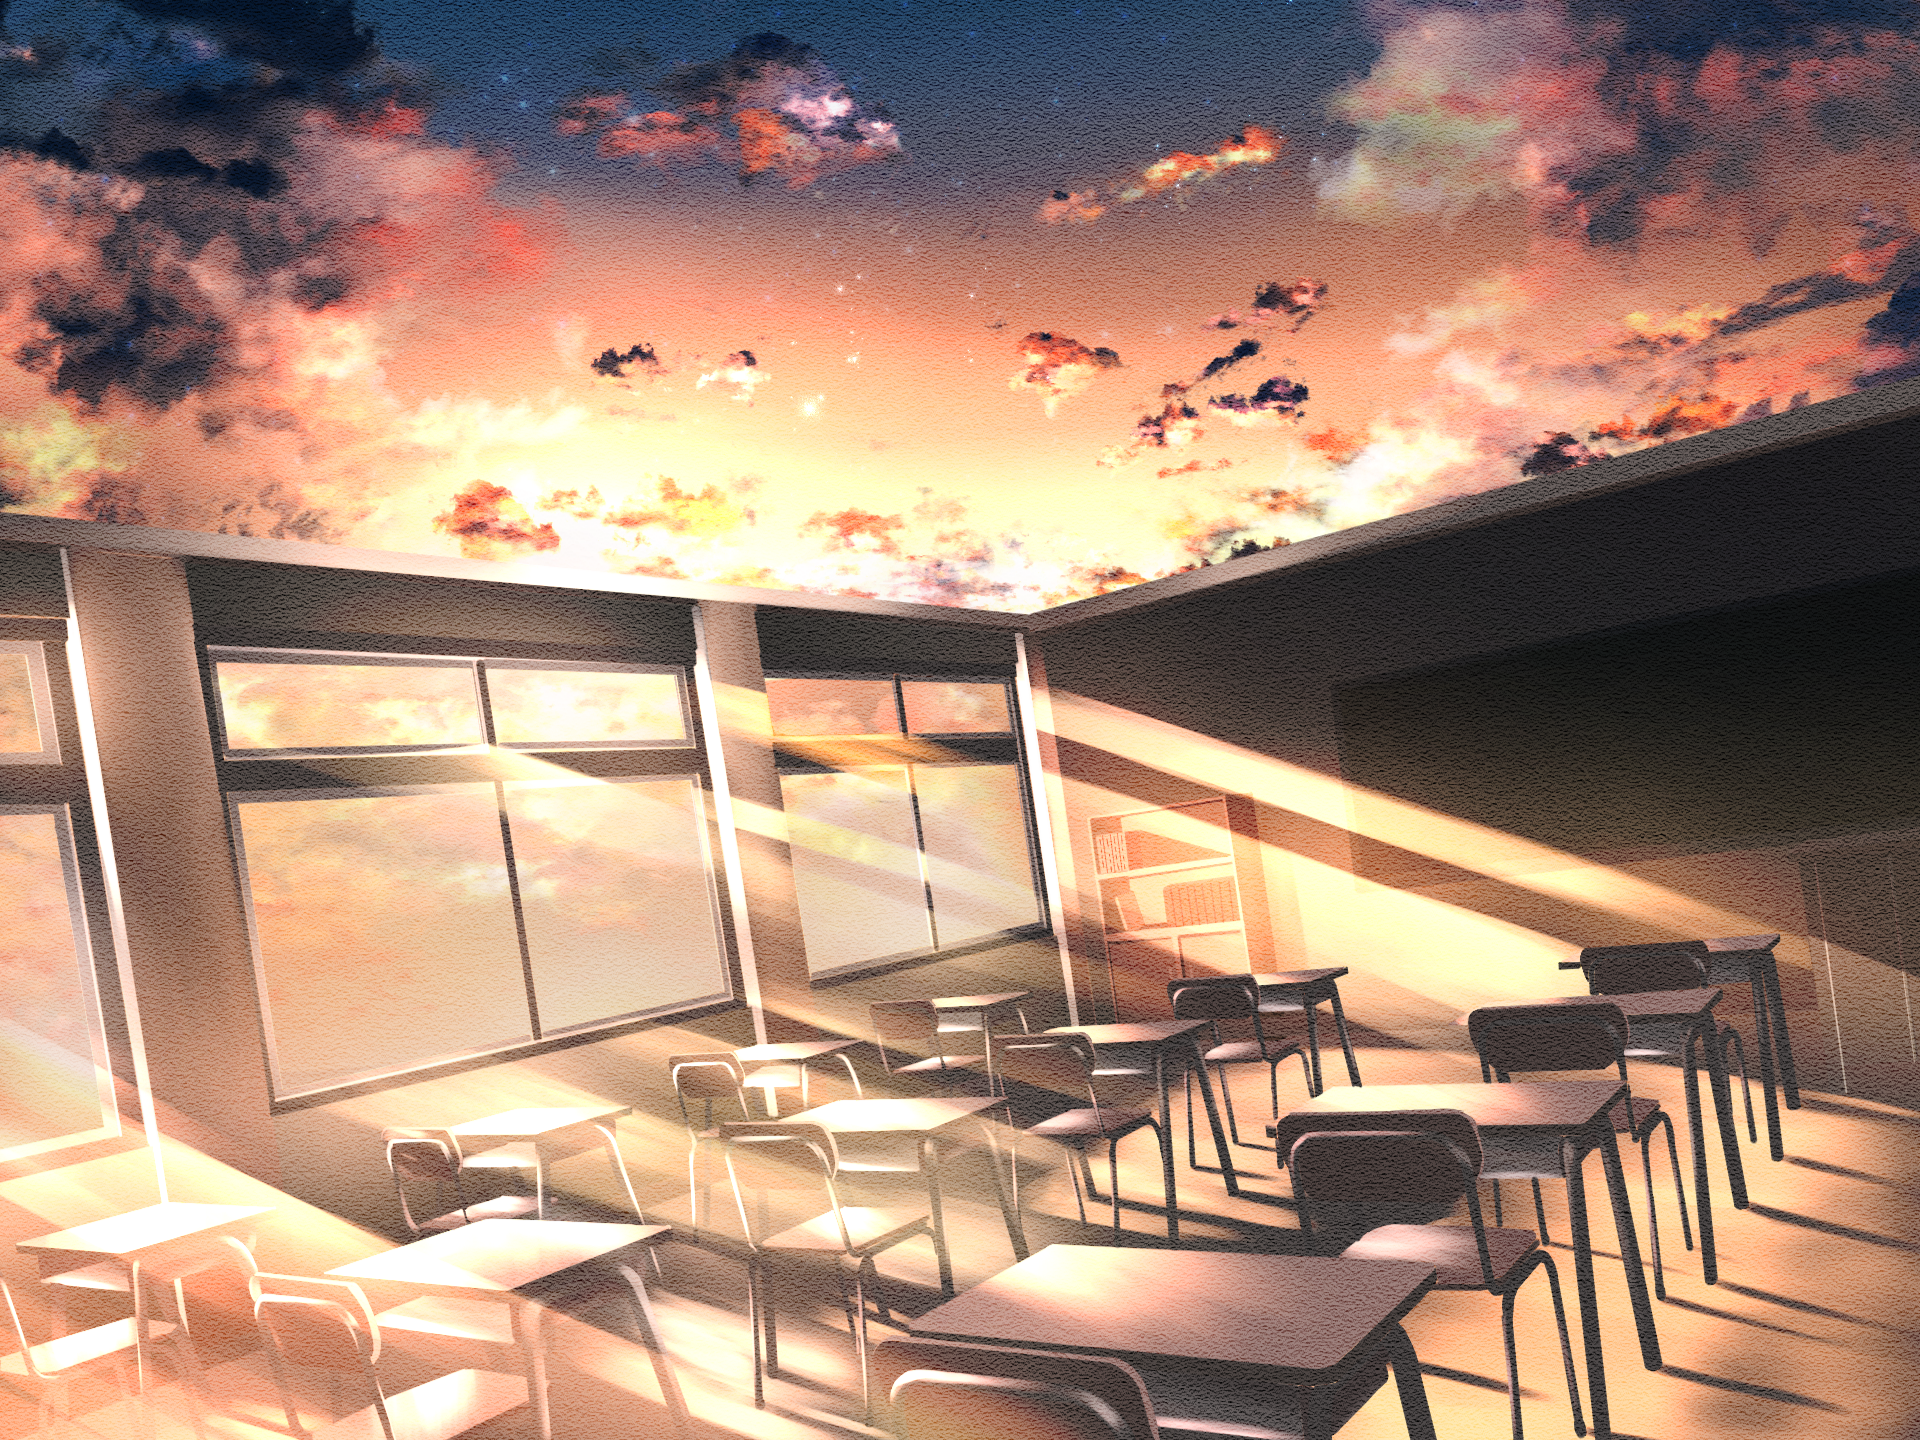 Classroom Sunset 1920x1440